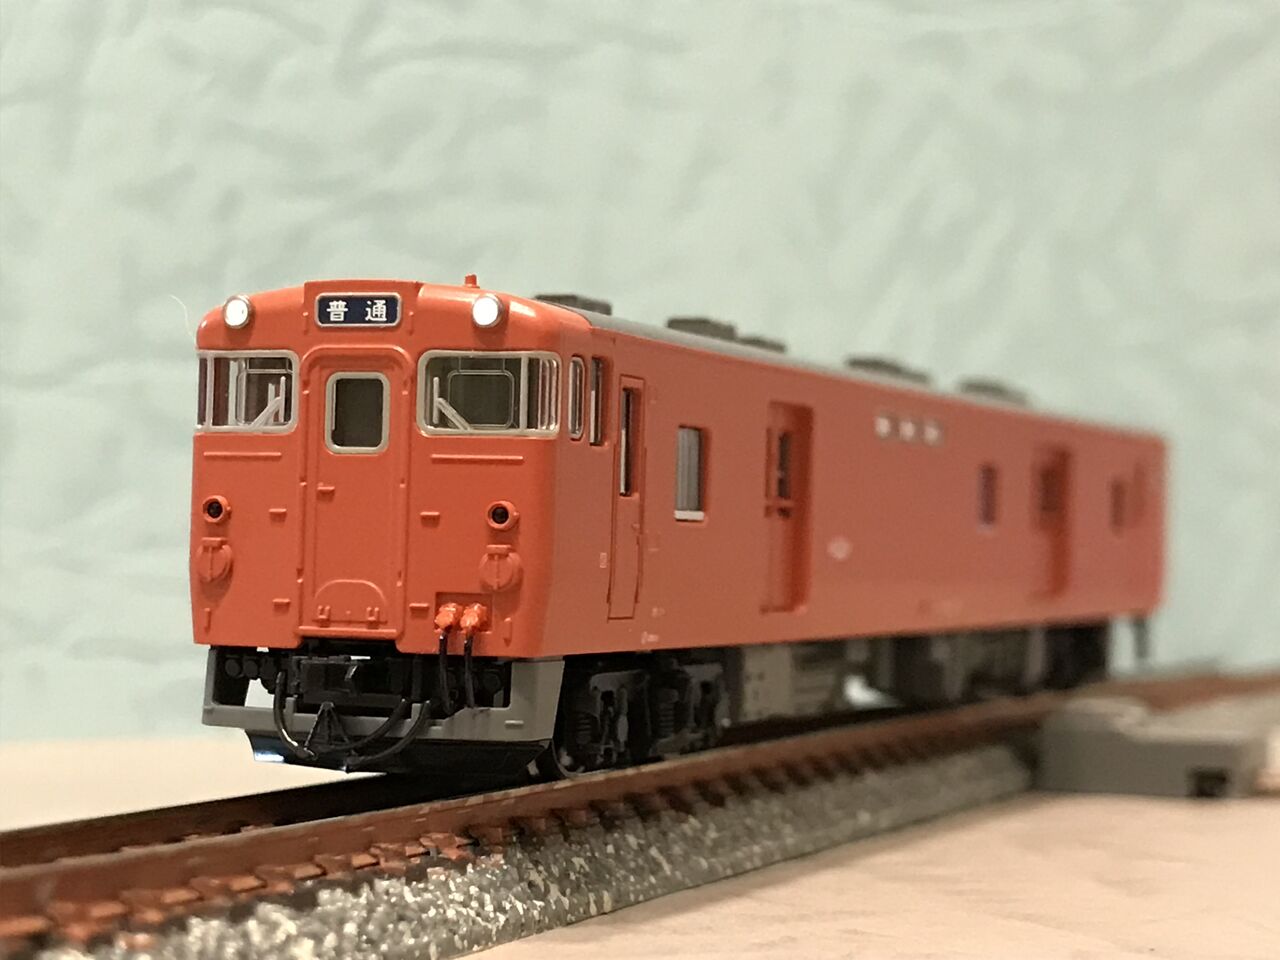 国鉄 キユニ１８・前期型 - 鉄道模型